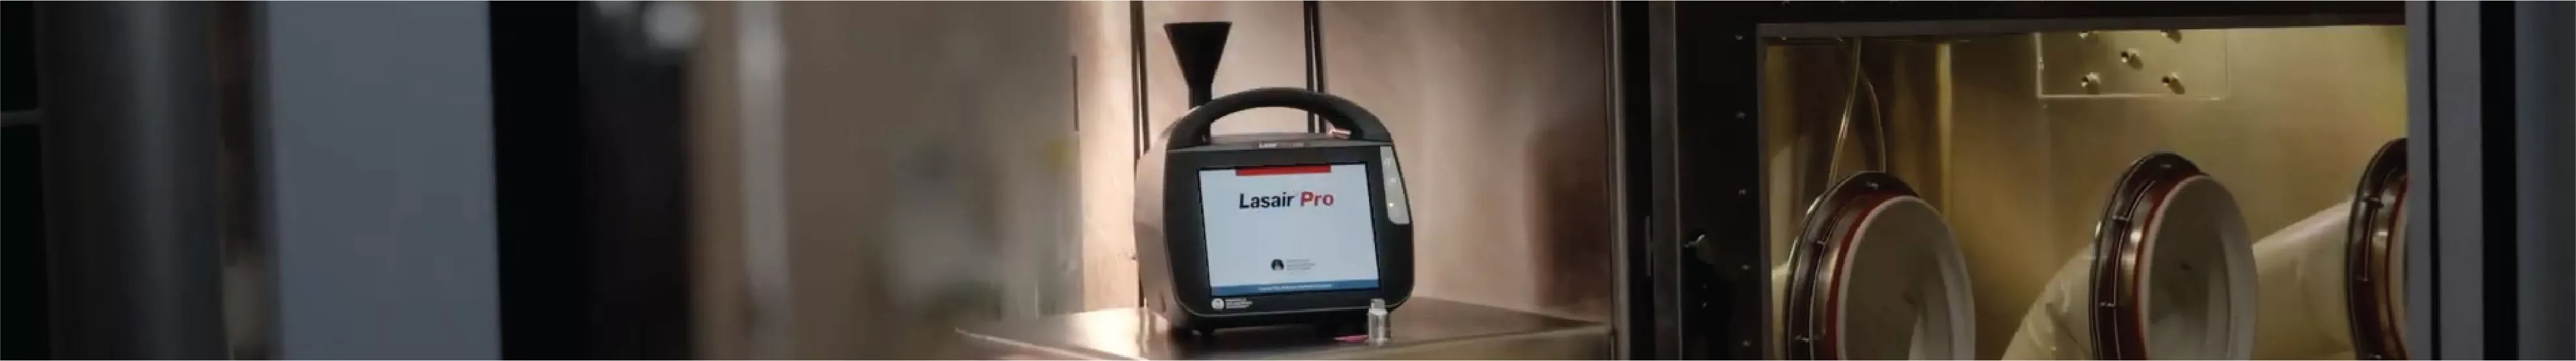 PMS Lasair Pro Header